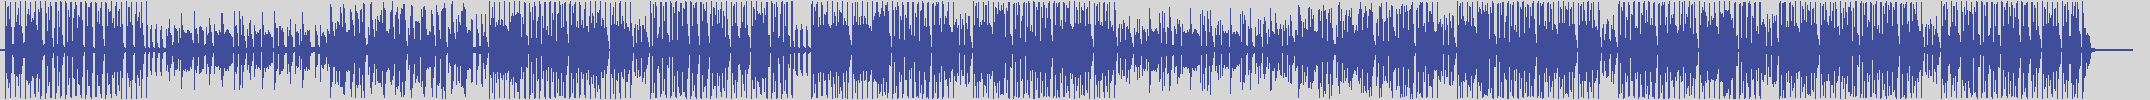 nf_boyz_records [NFY035] Samuel Darwin - Stage on Me [Sven Dixon Mix] audio wave form